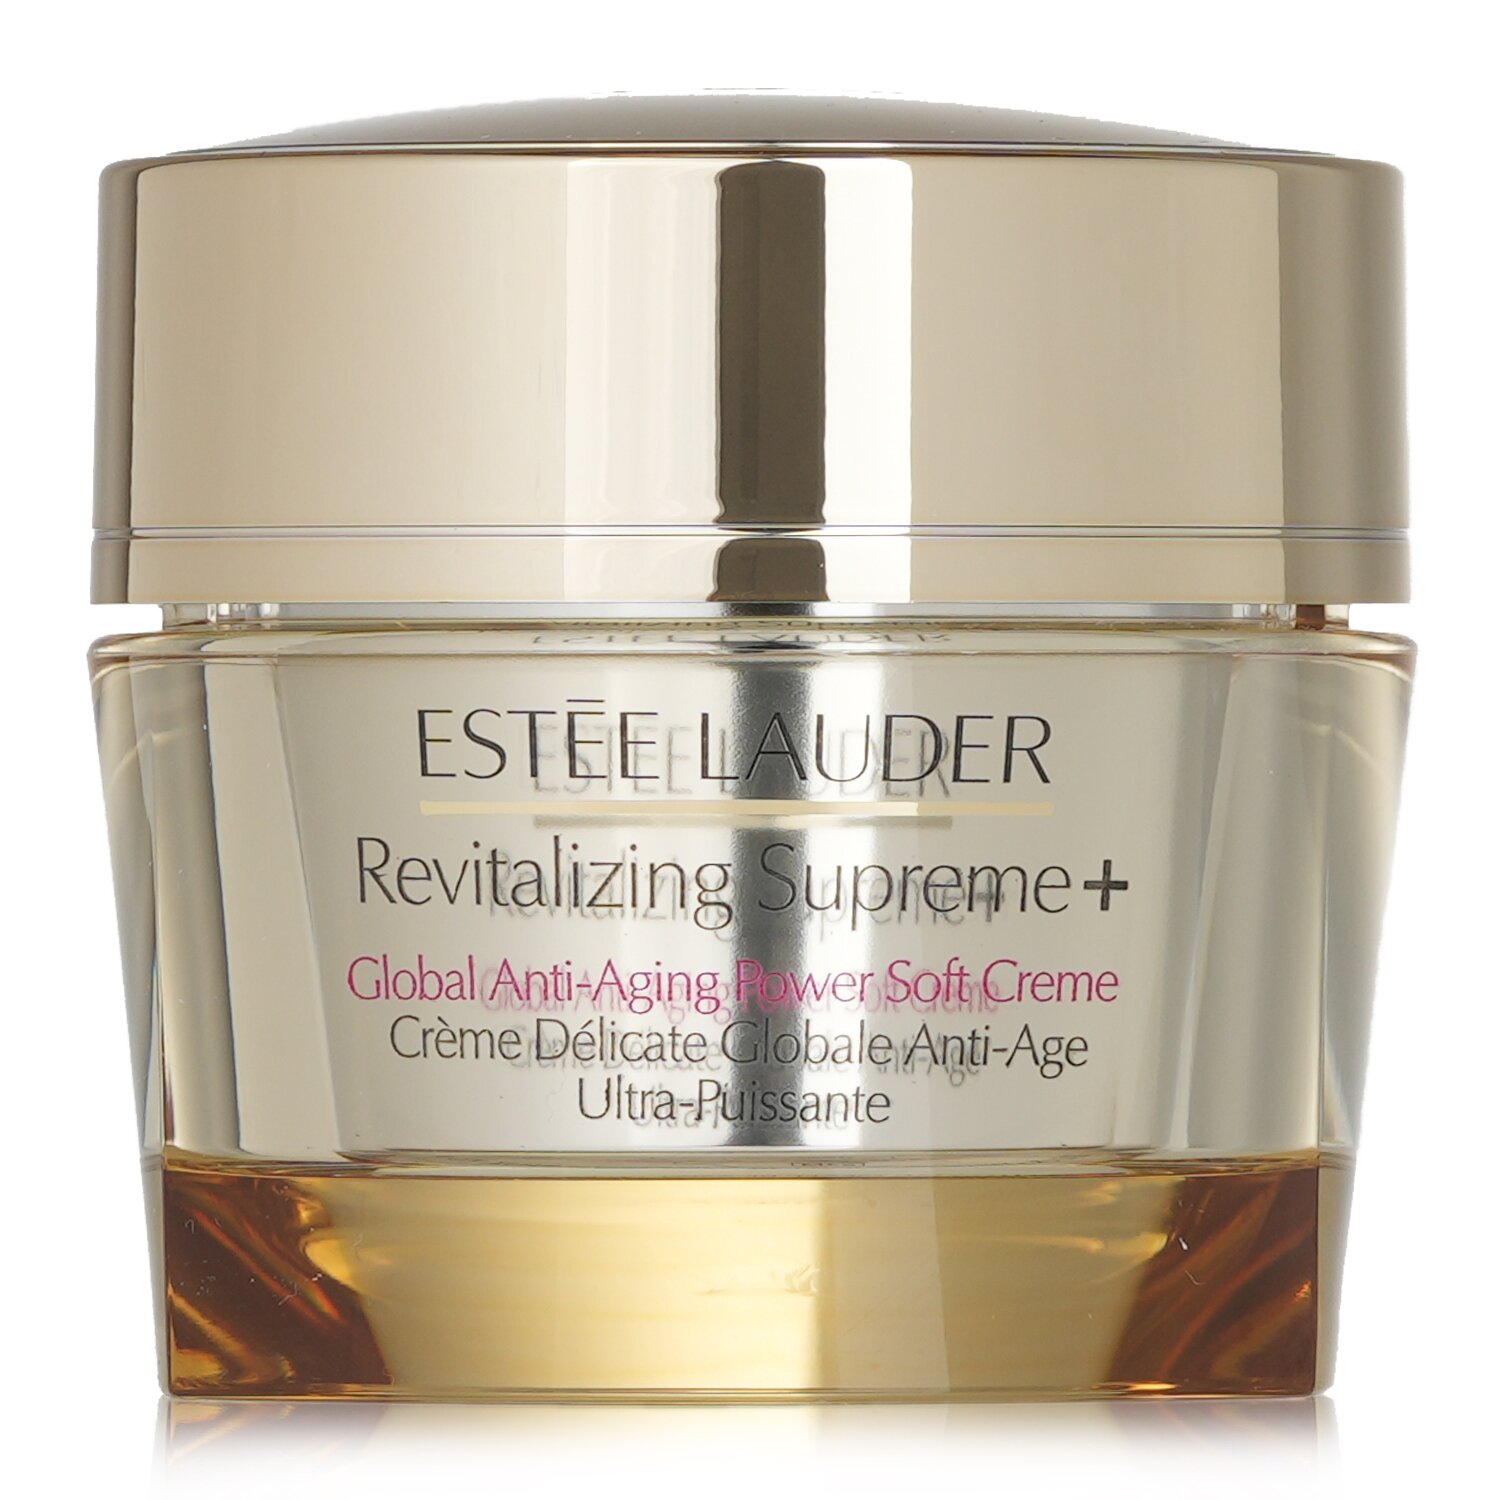 Estee Lauder Revitalizing Supreme + Global Anti-Aging Power Soft Creme 50ml/1.7oz